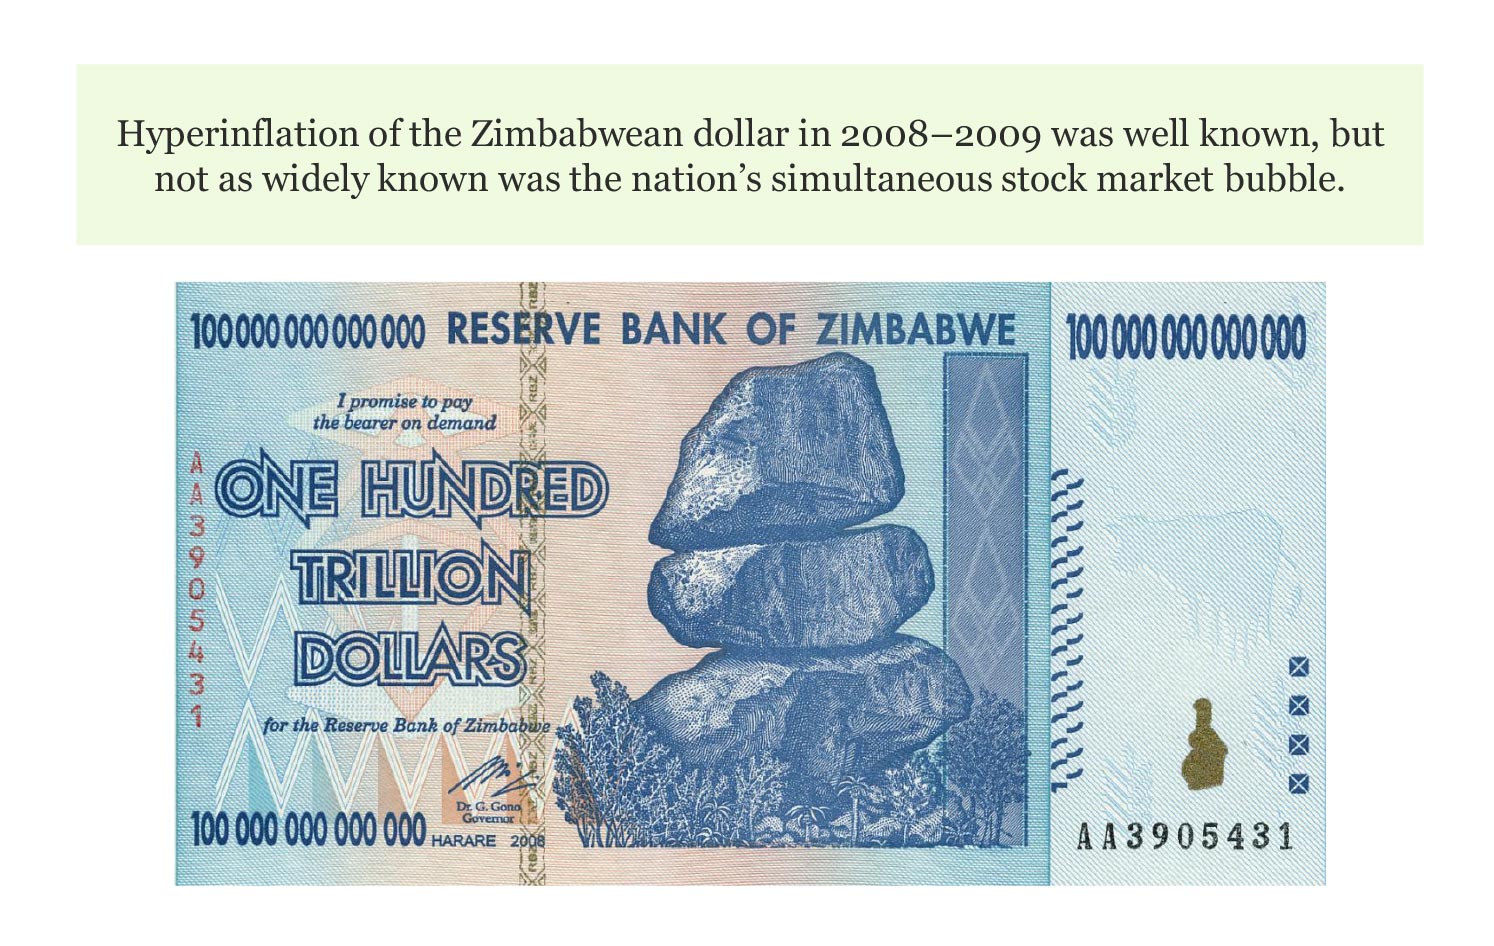 668-yes-its-a-bubble-figure-zimbabwean-dollar